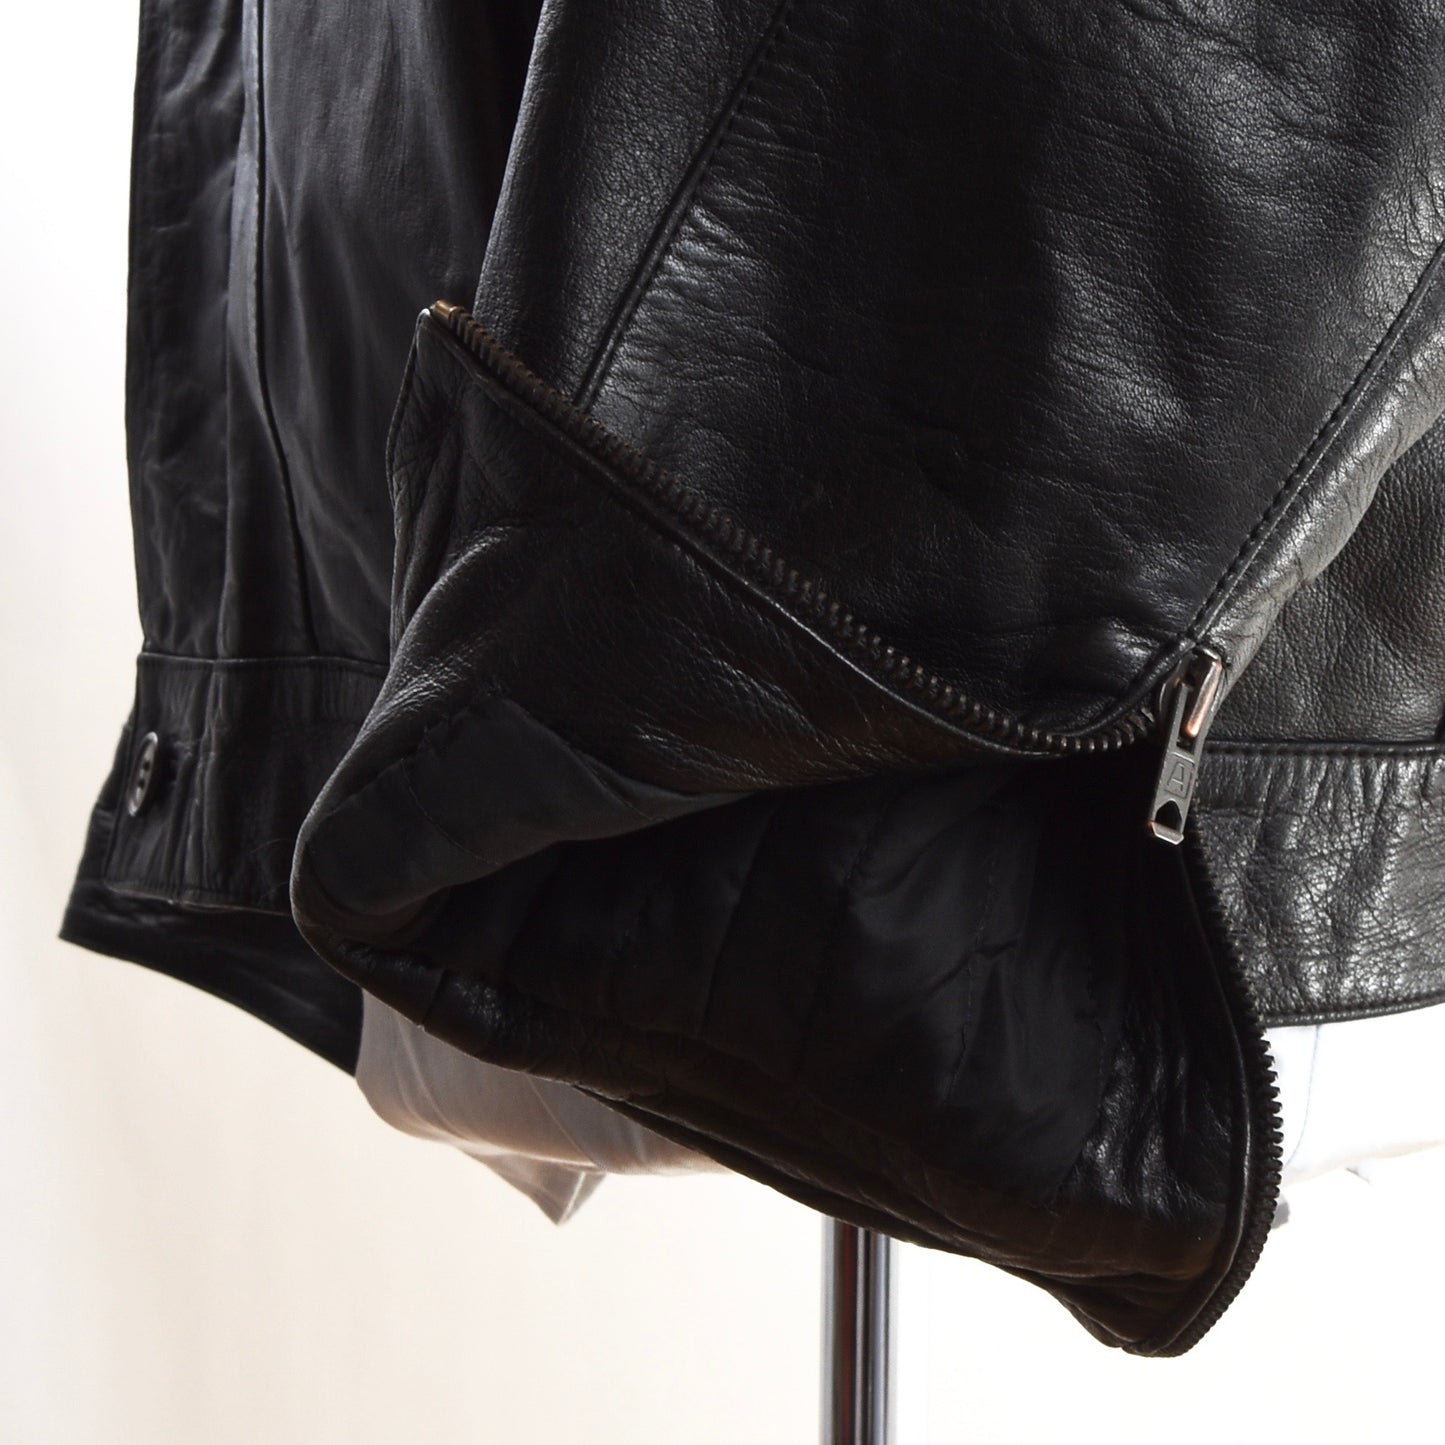 Loewe Madrid Leather Jacket Size 48 - Black